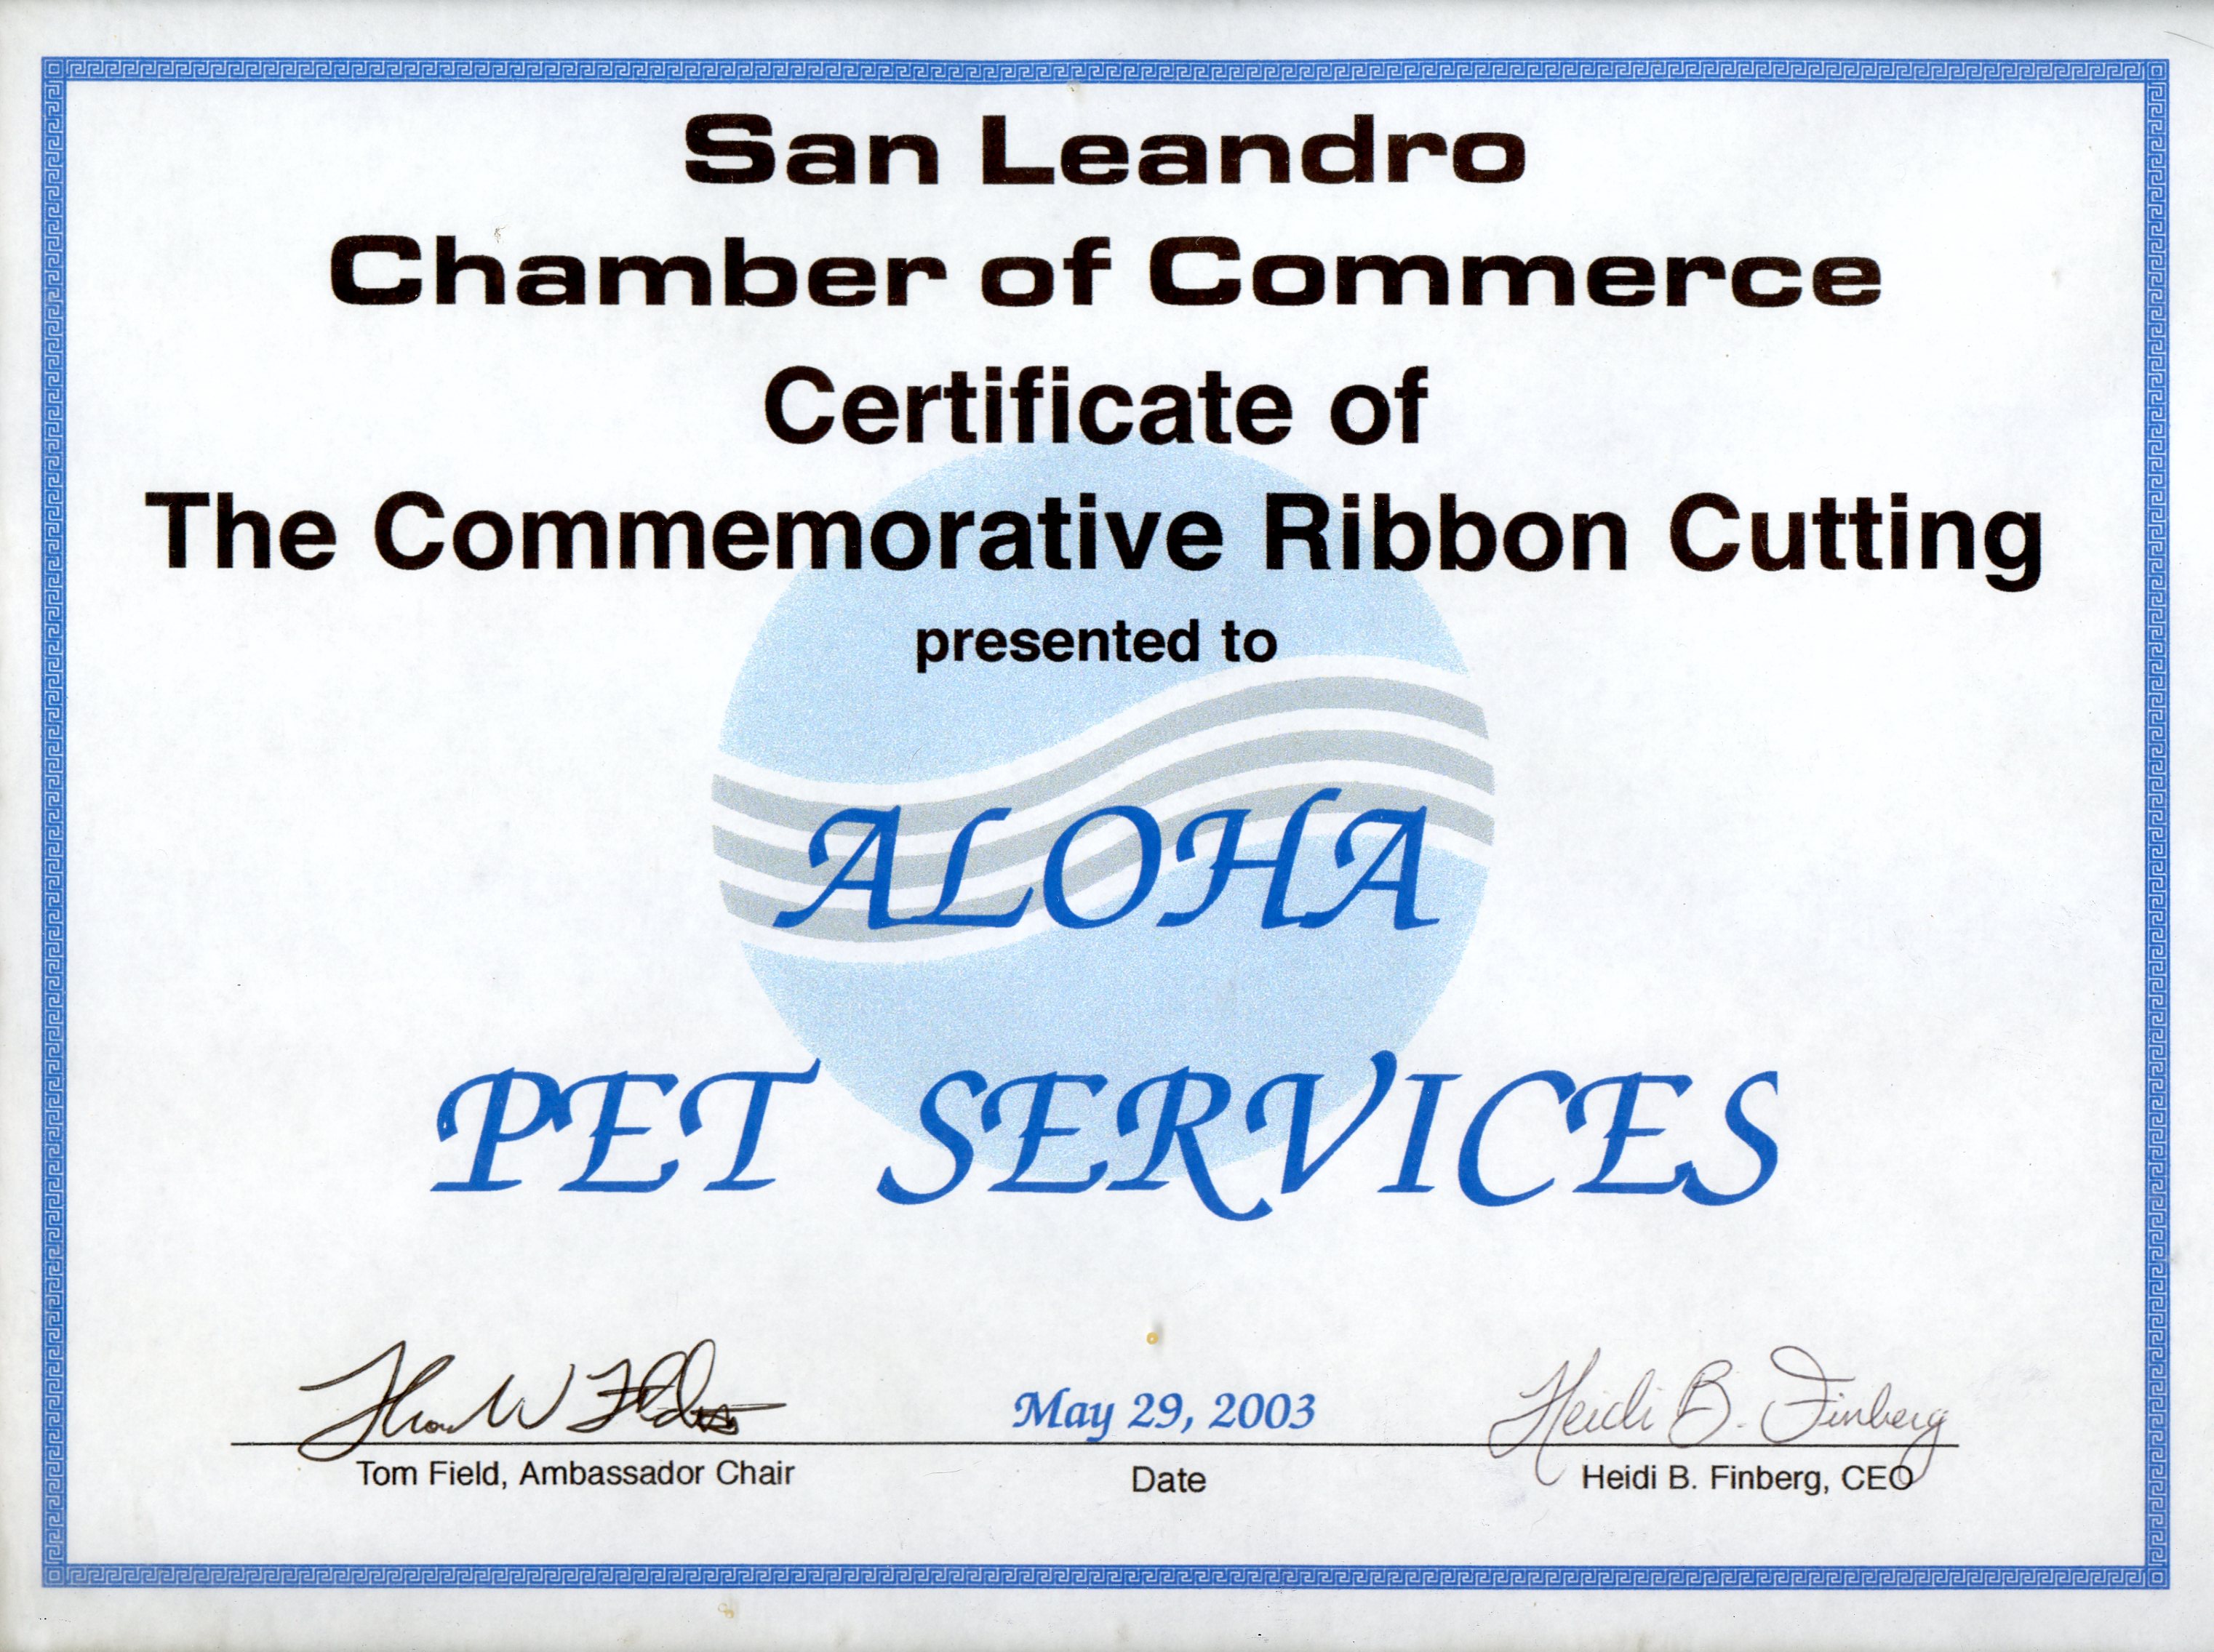 San Leandro Chamber of Commerce Commemorative Ribbon Cutting